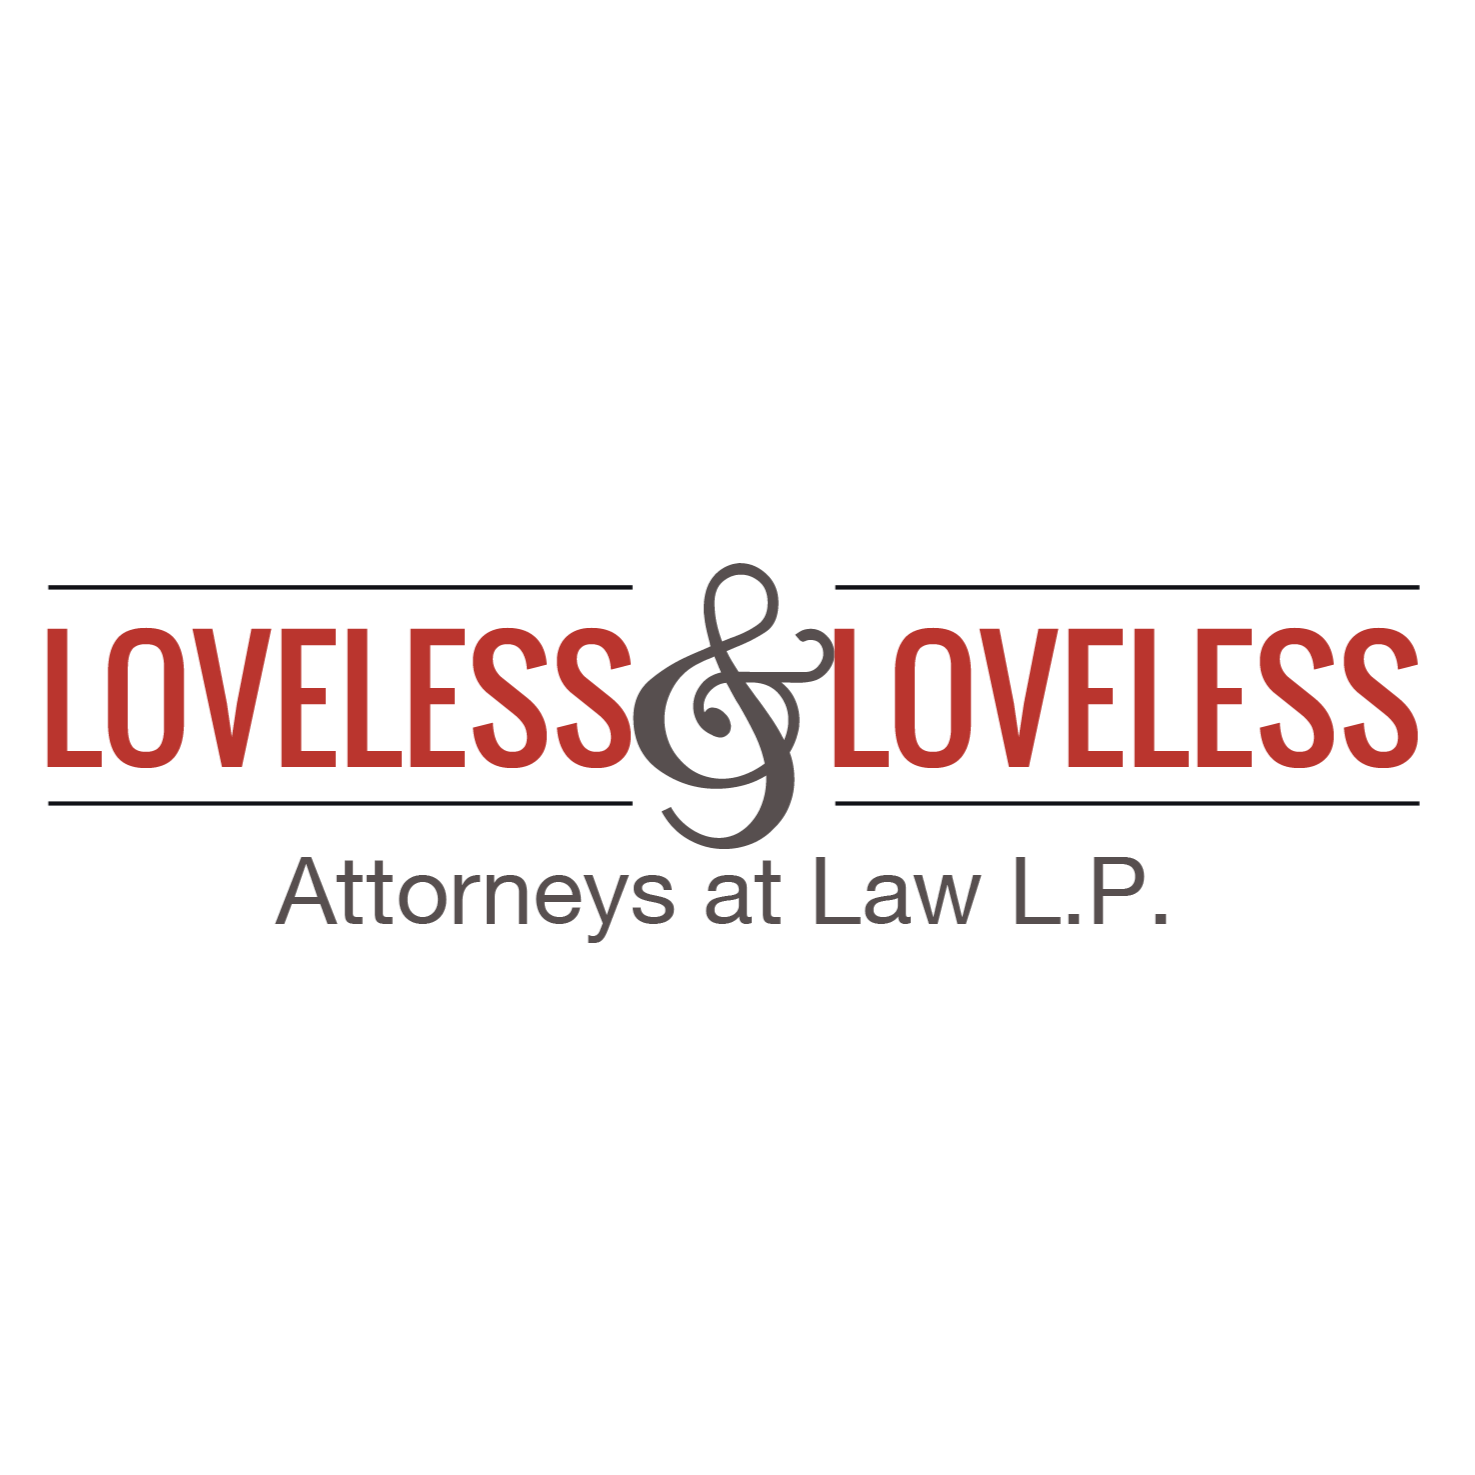 Loveless & Loveless Attorneys - Denton, TX 76201 - (940)387-3776 | ShowMeLocal.com